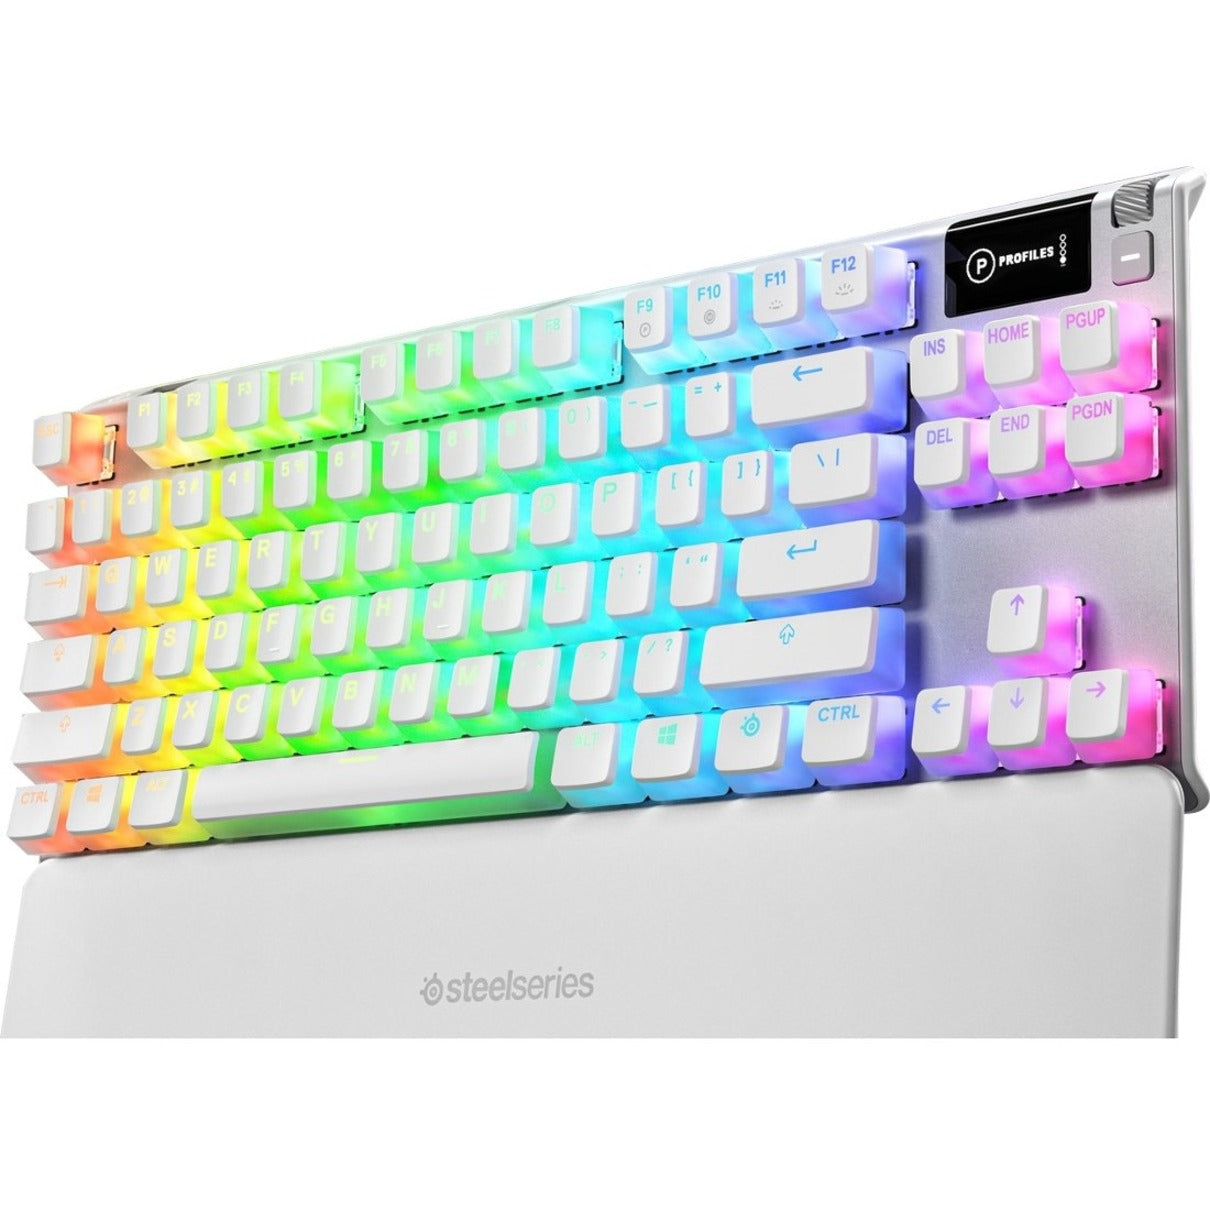 SteelSeries Super Limited Apex Pro Mini Keyboard